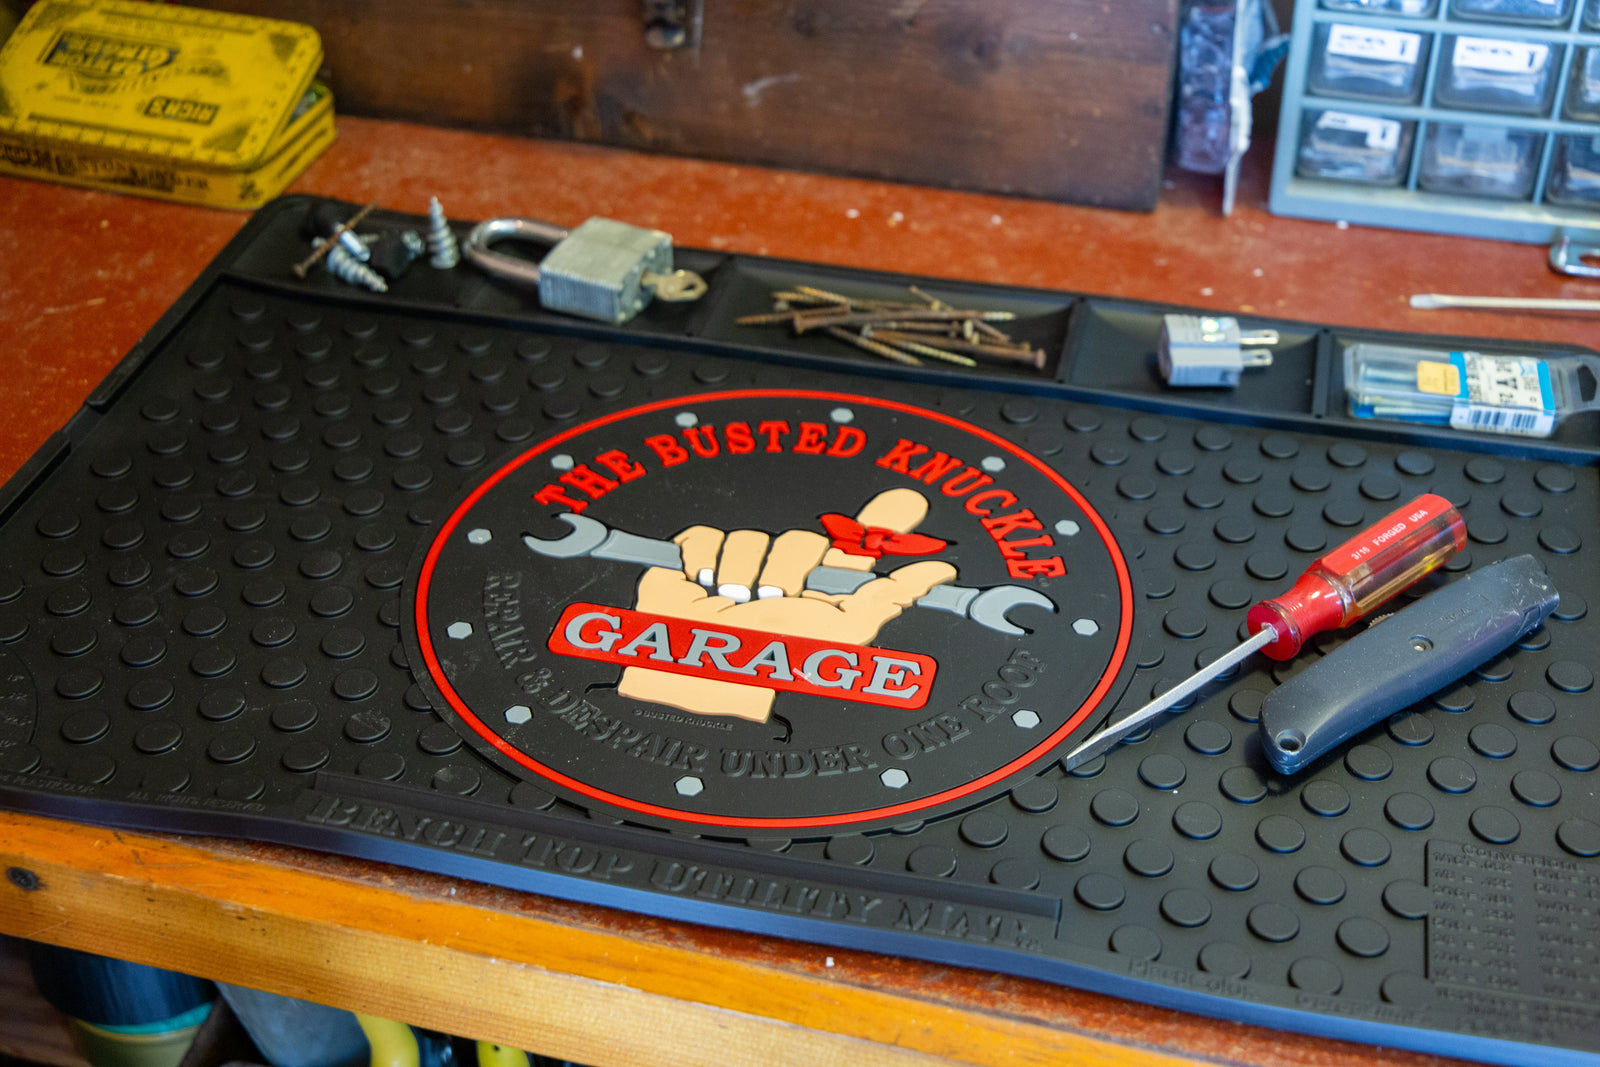 Garage Workbench & Floor Mats / Busted Knuckle Garage Tagged mats -  Busted Knuckle Garage Gifts & Gear